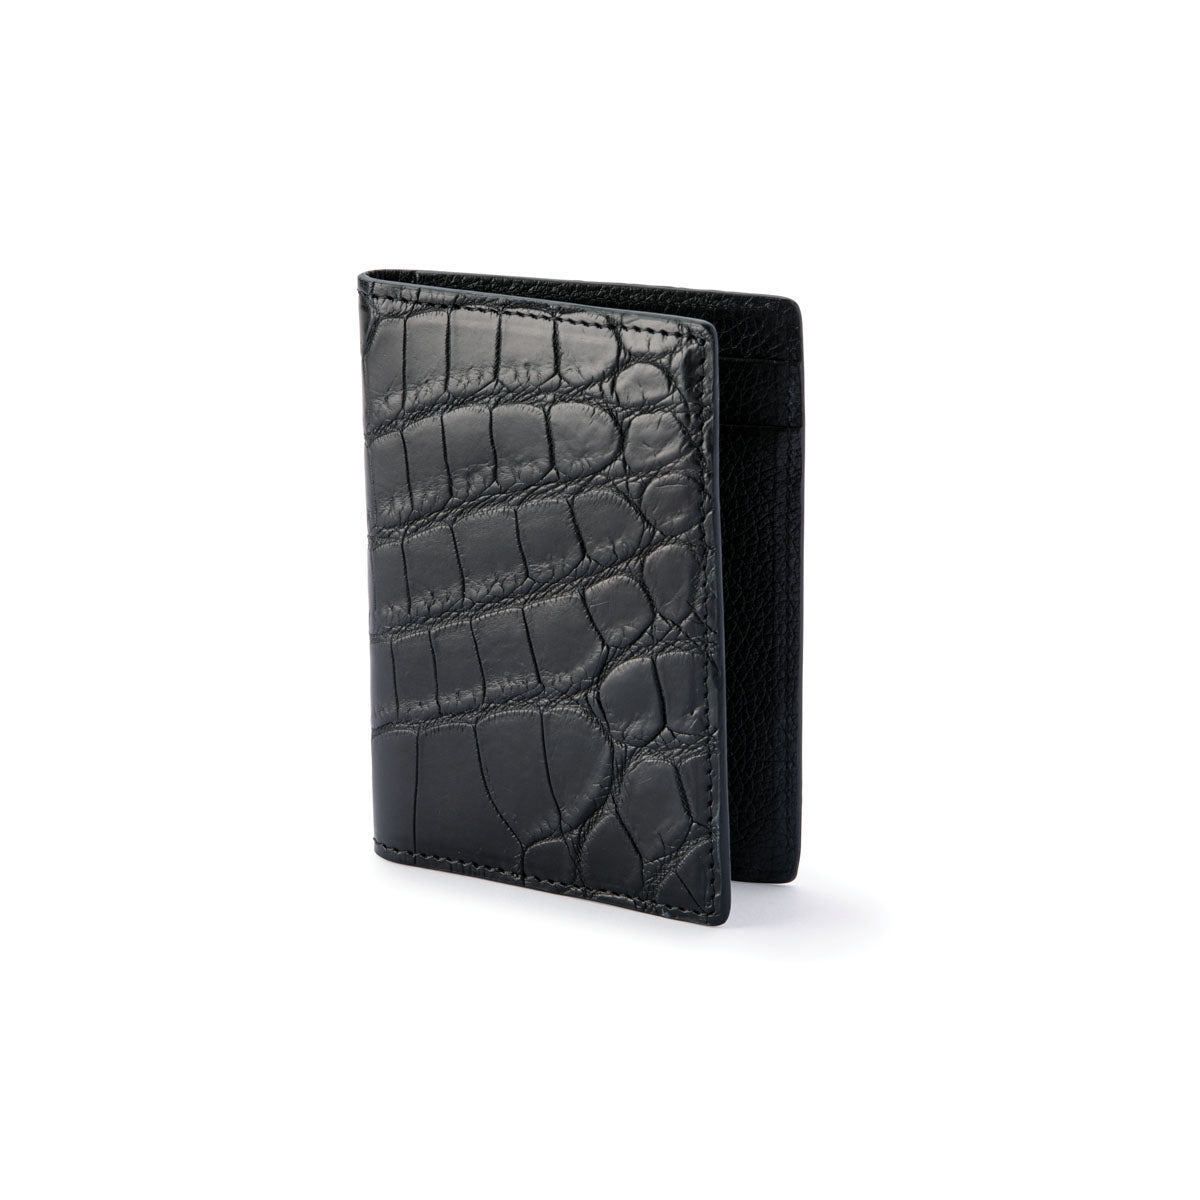 LIN8 luxury genuine exotic alligator and crocodile leather card case holder wallet for purse and handbag. Gift,present for him,her designer Melbourne Australia London